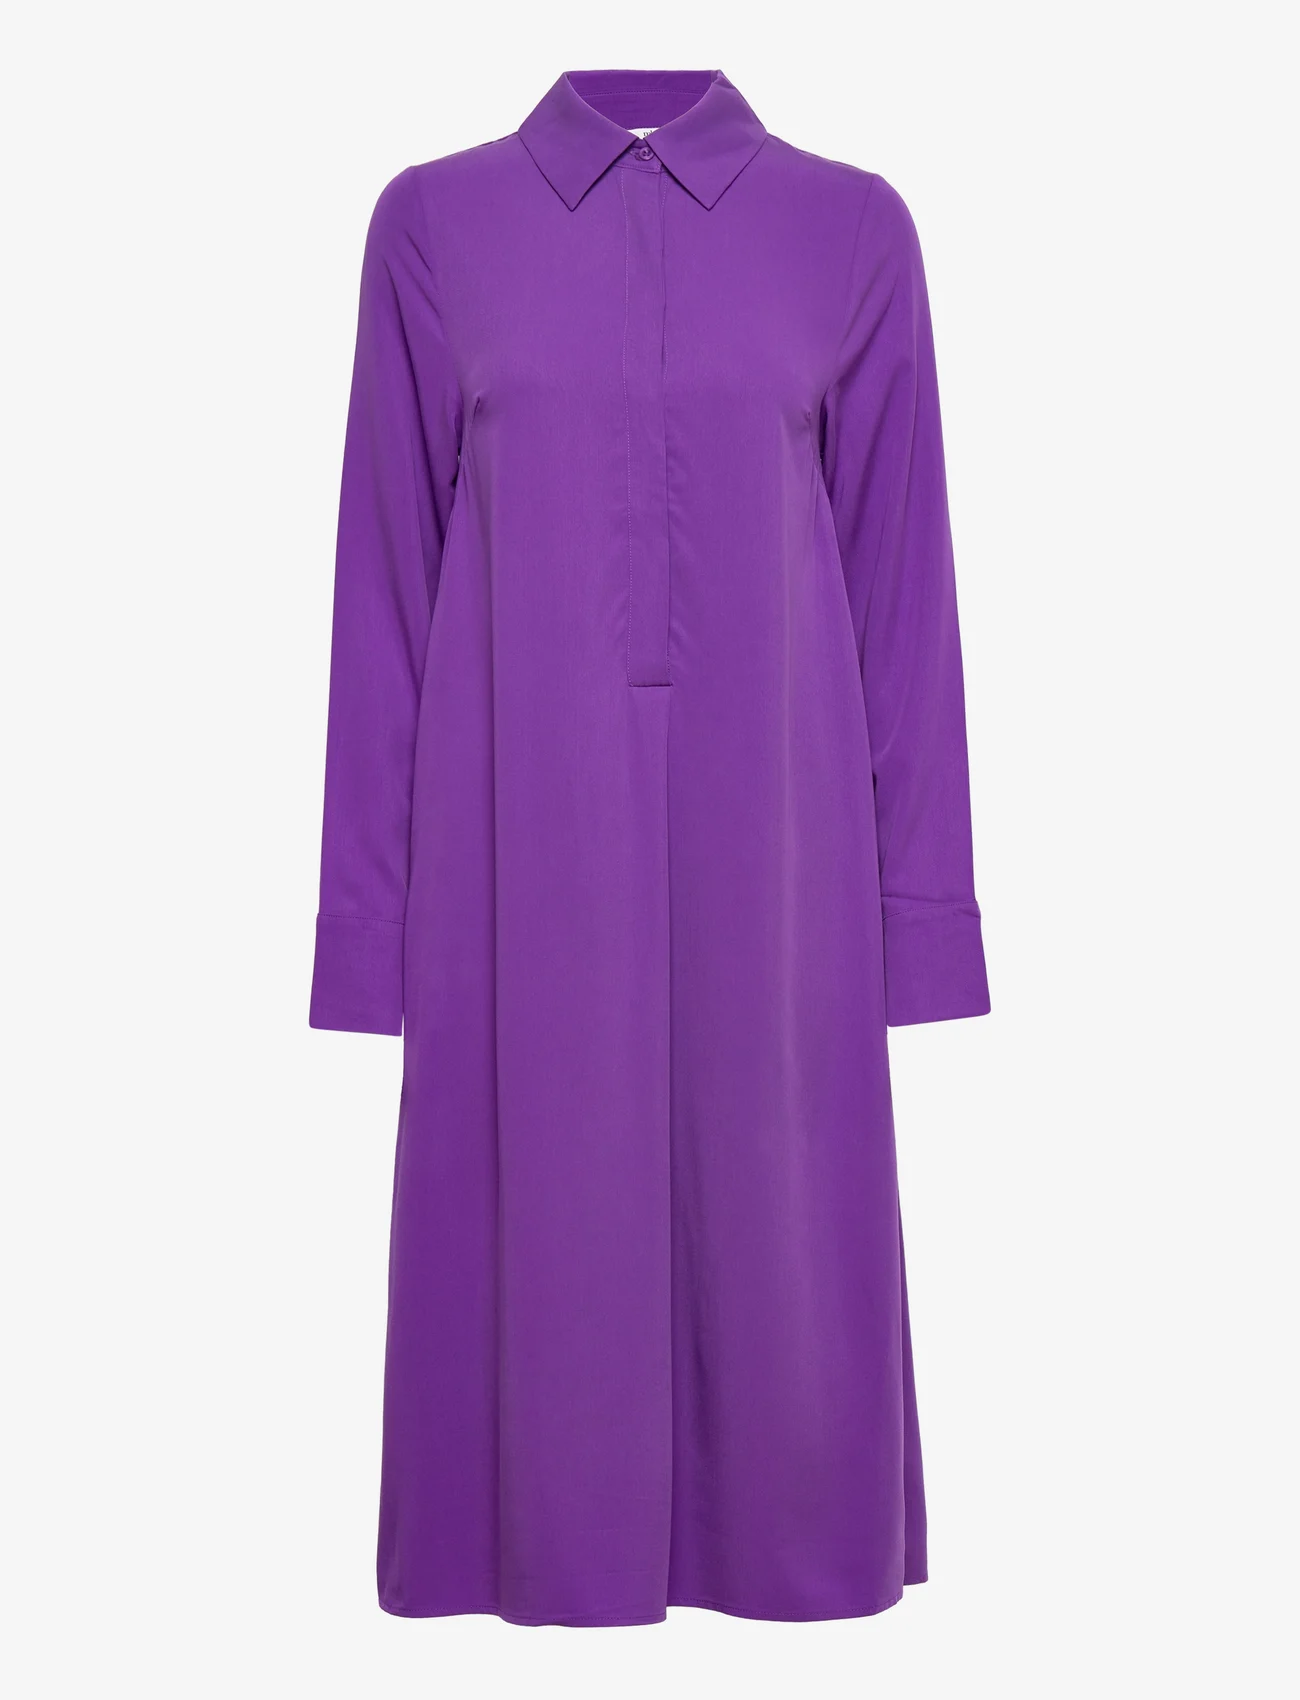 mbyM - Leyla-M - shirt dresses - pansy lilac - 0